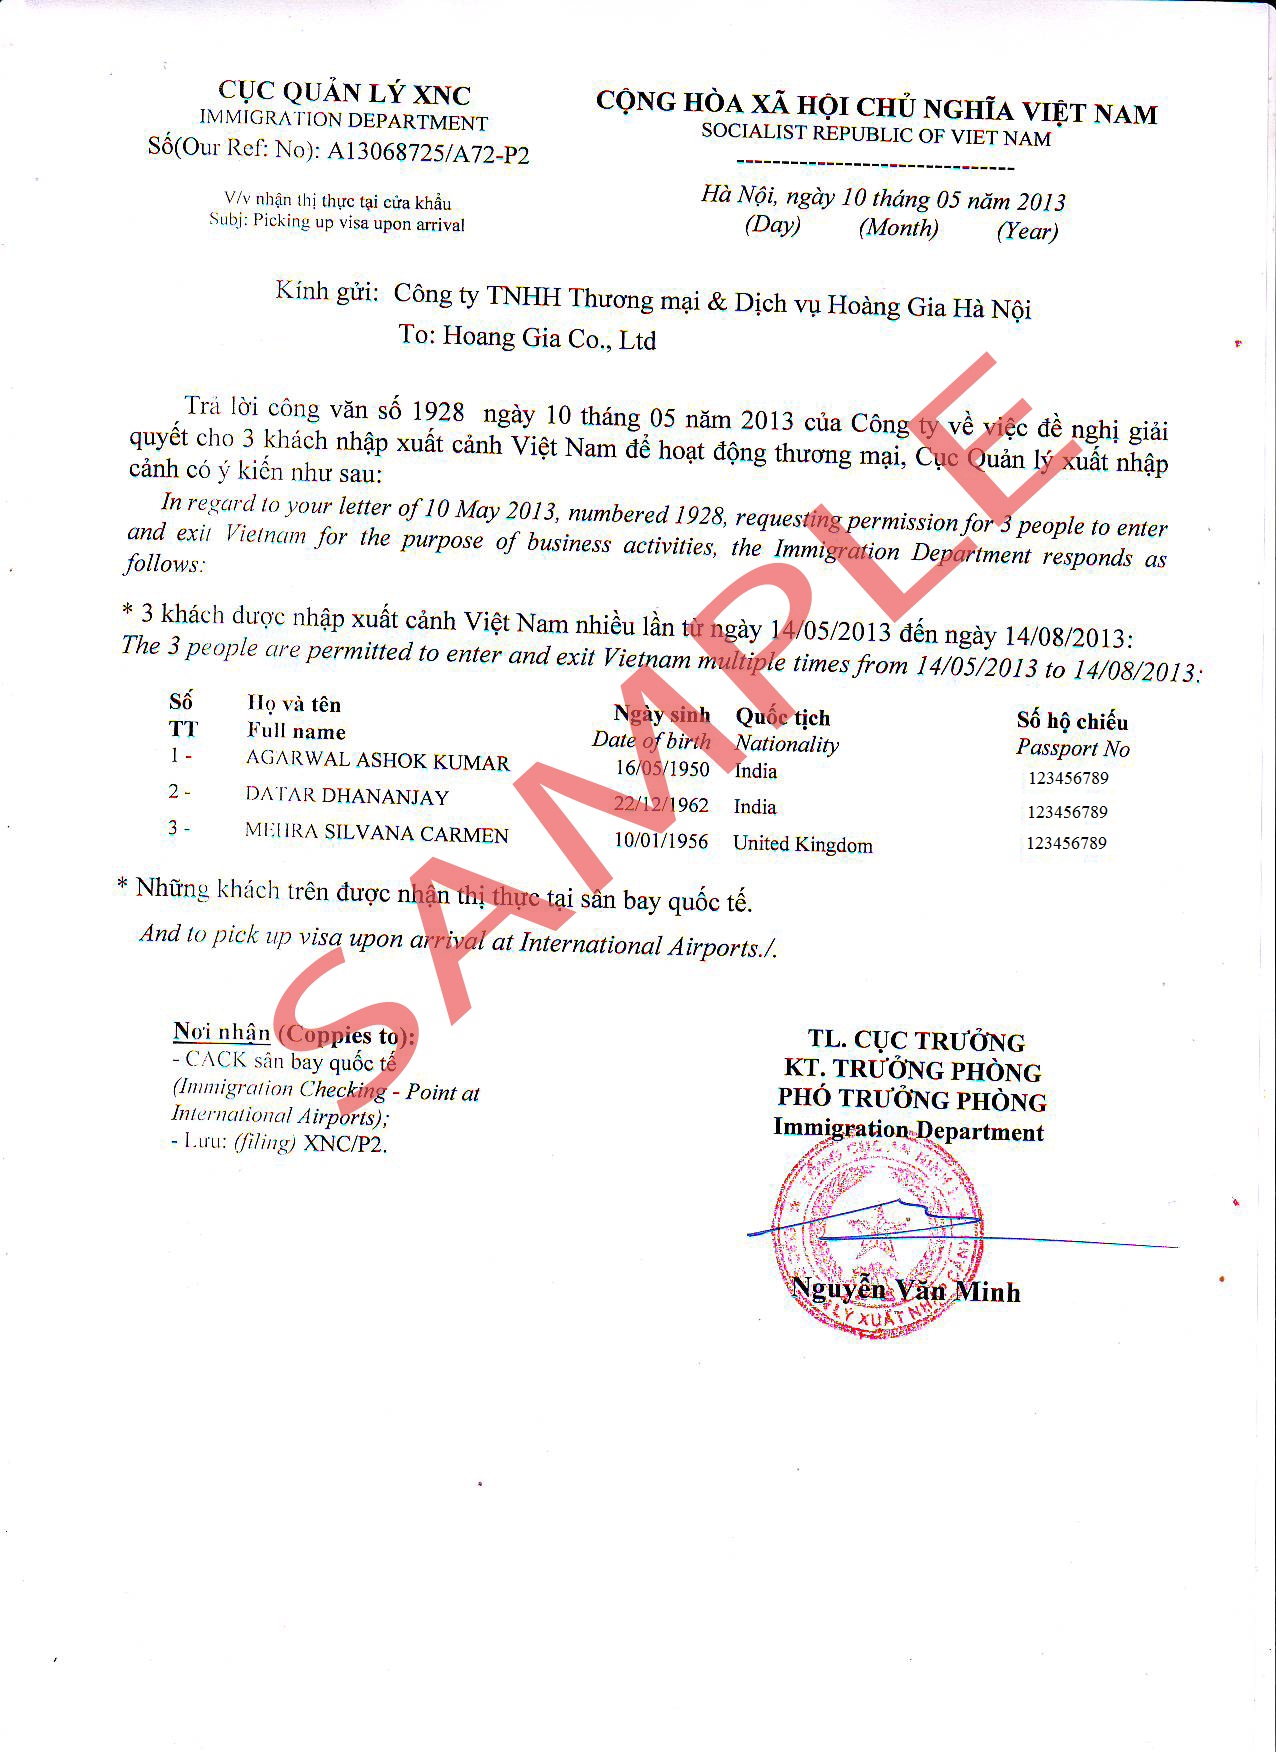 2. Vietnam Visa approval letter